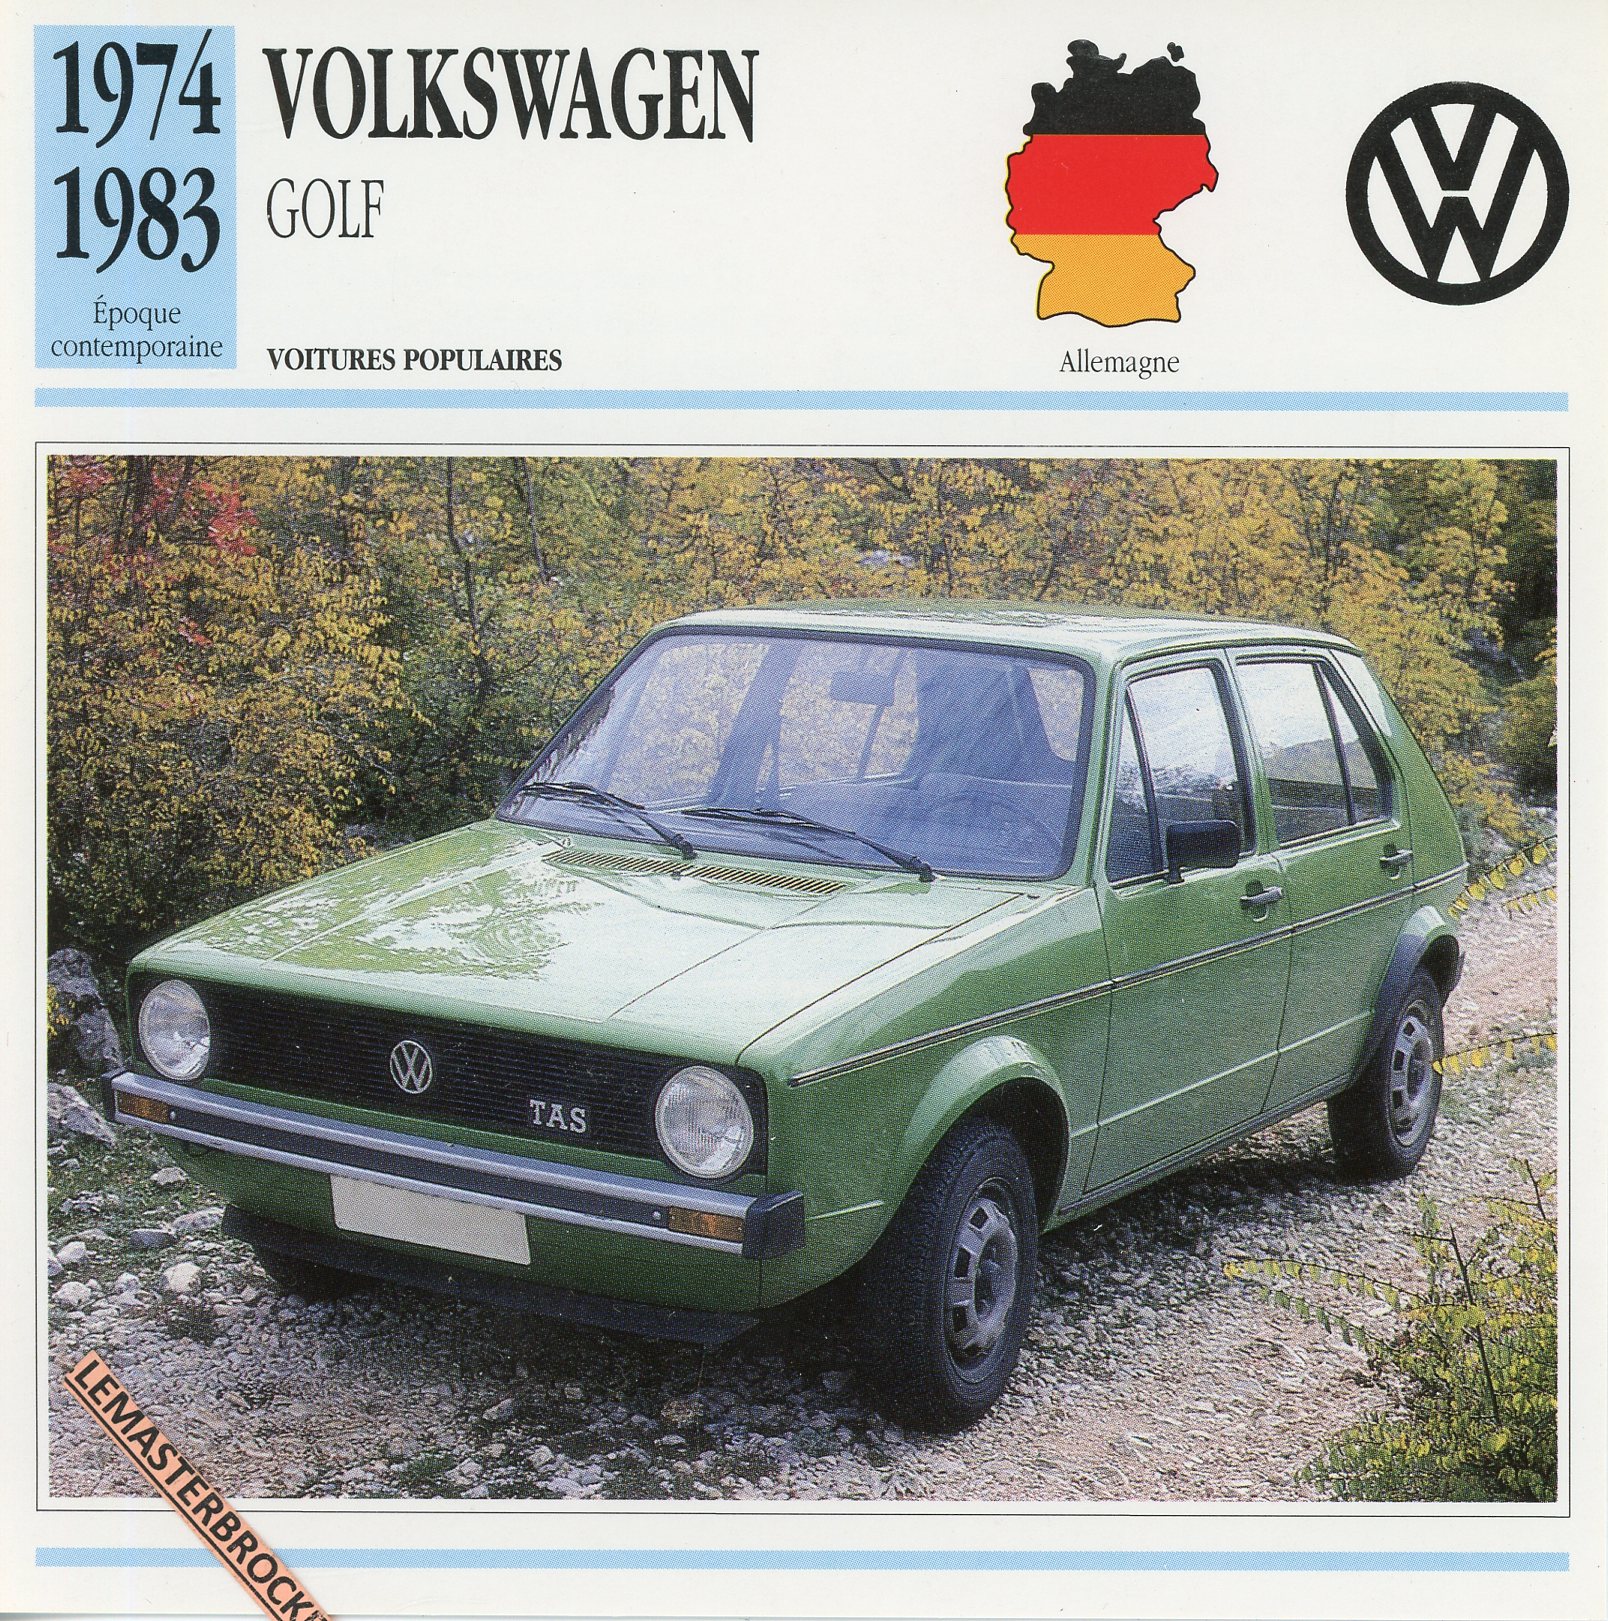 VW-GOLF-VOLKSWAGEN-1974-LEMASTERBROCKERS-FICHE-AUTO-CARS-CARD-ATLAS